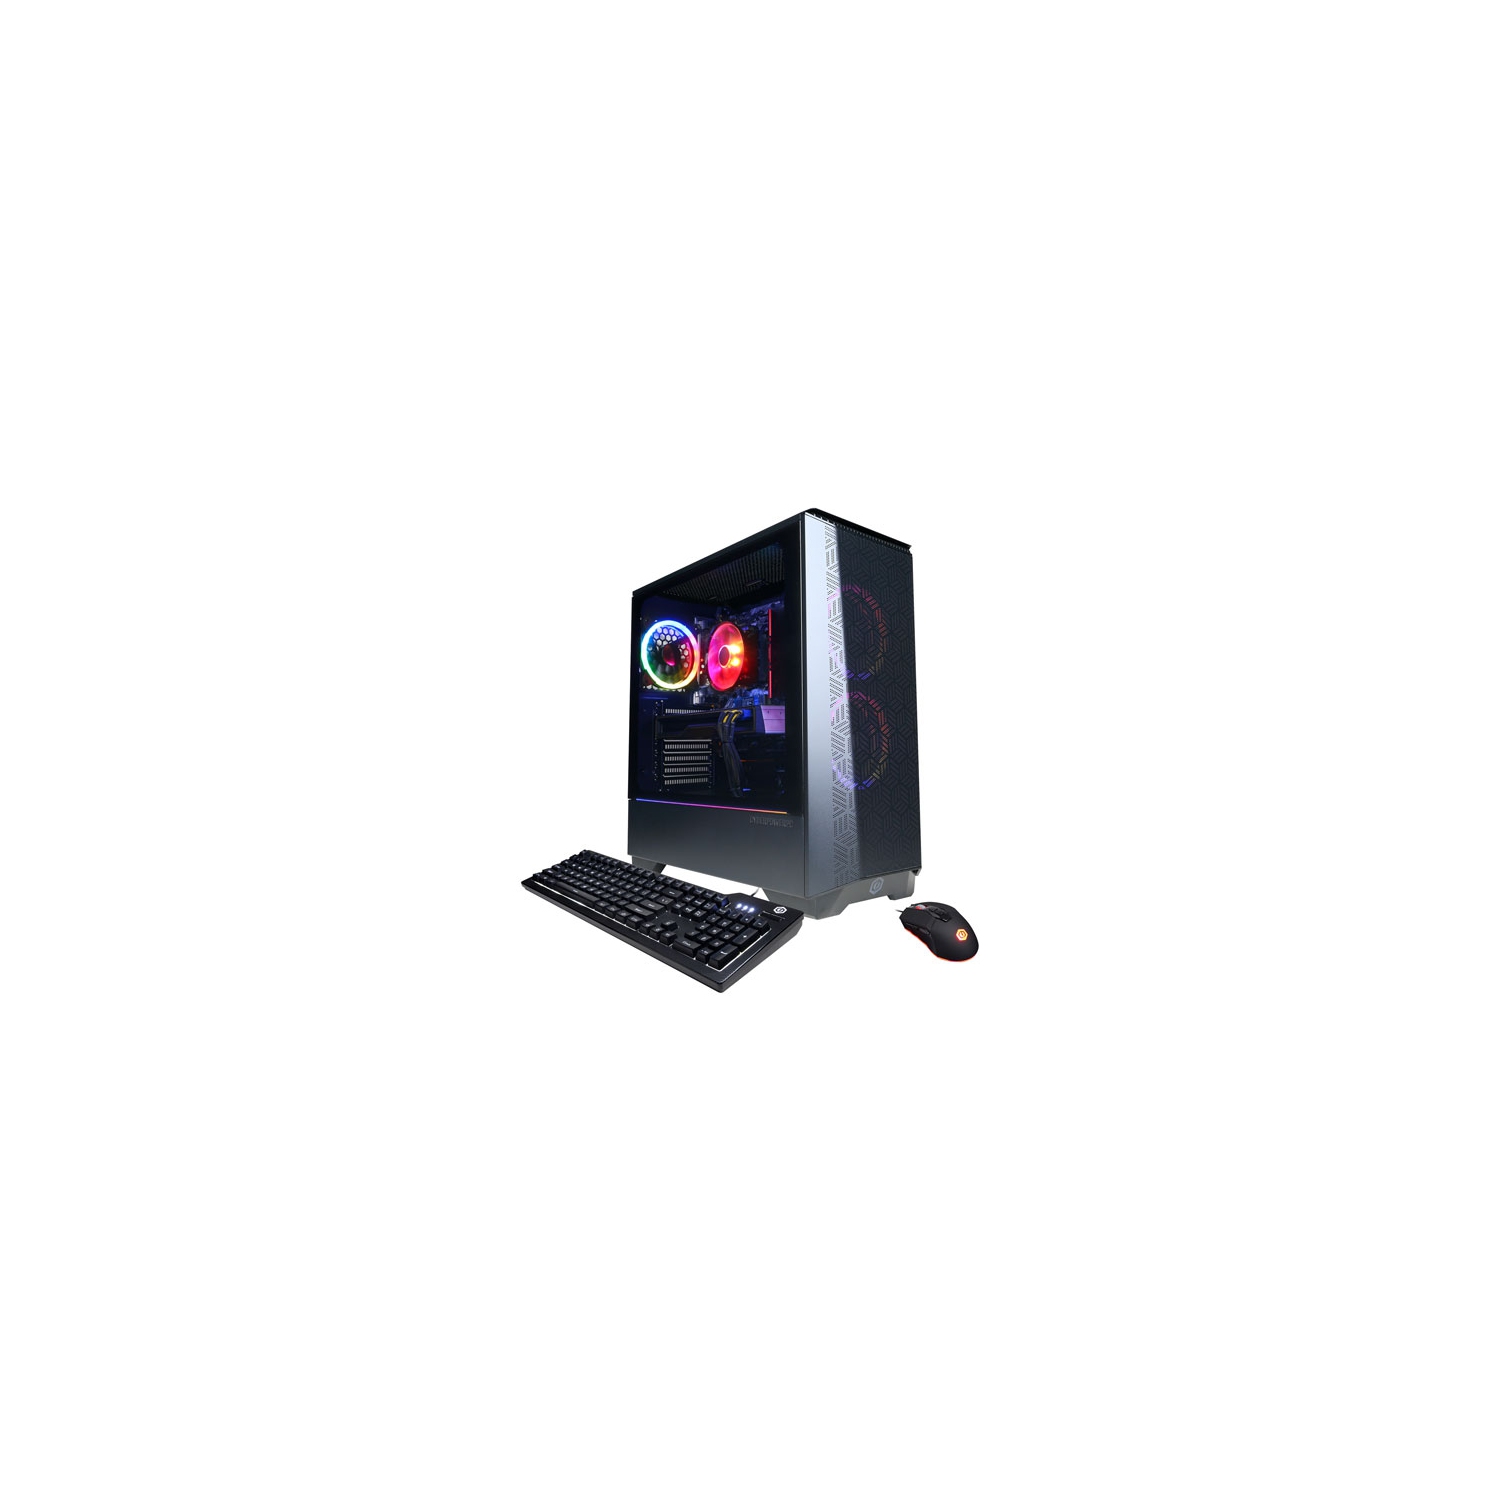 Open Box - CyberPowerPC Gamer Master Gaming PC (AMD Ryzen 5 3600/500GB SSD/8GB RAM/Radeon RX 580) - En